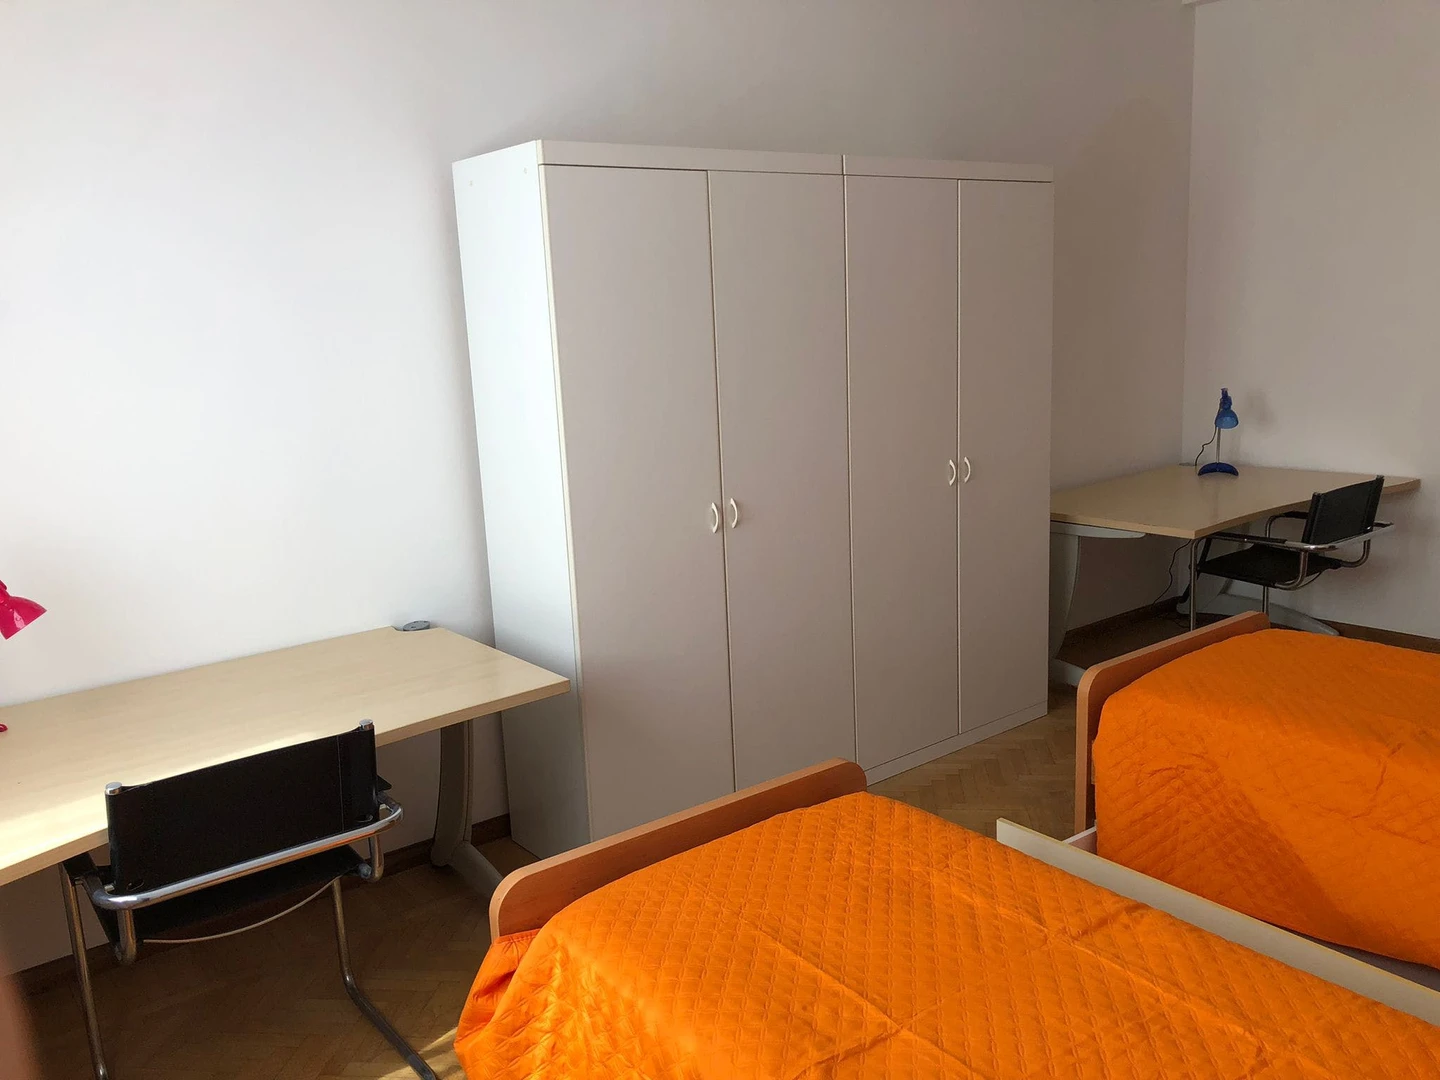 Cheap shared room in Ferrara